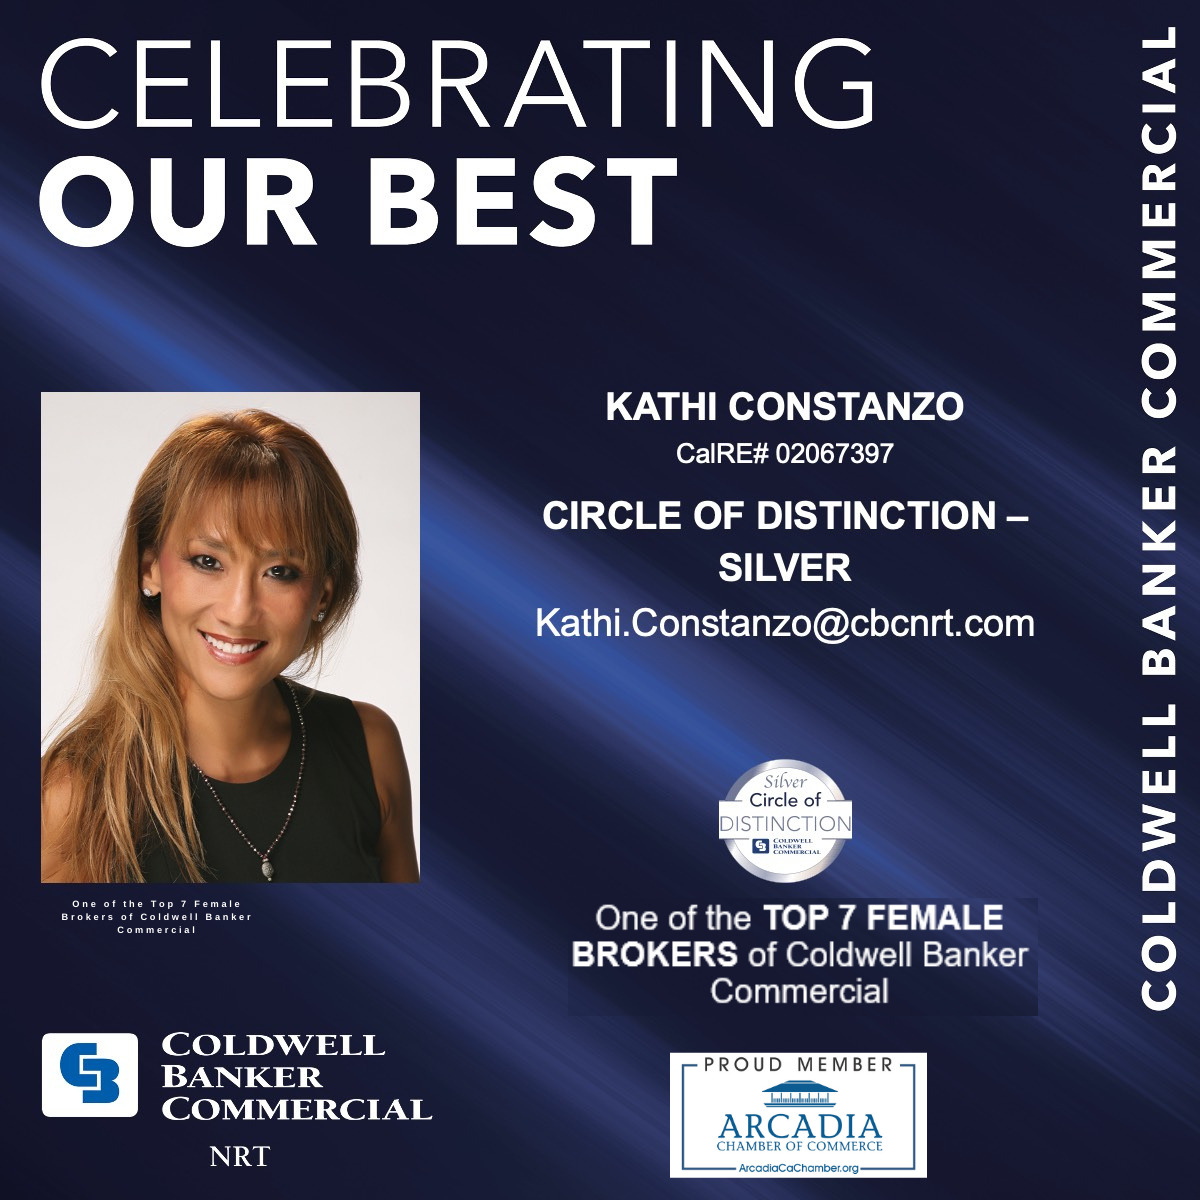 Kathi Constanzo award